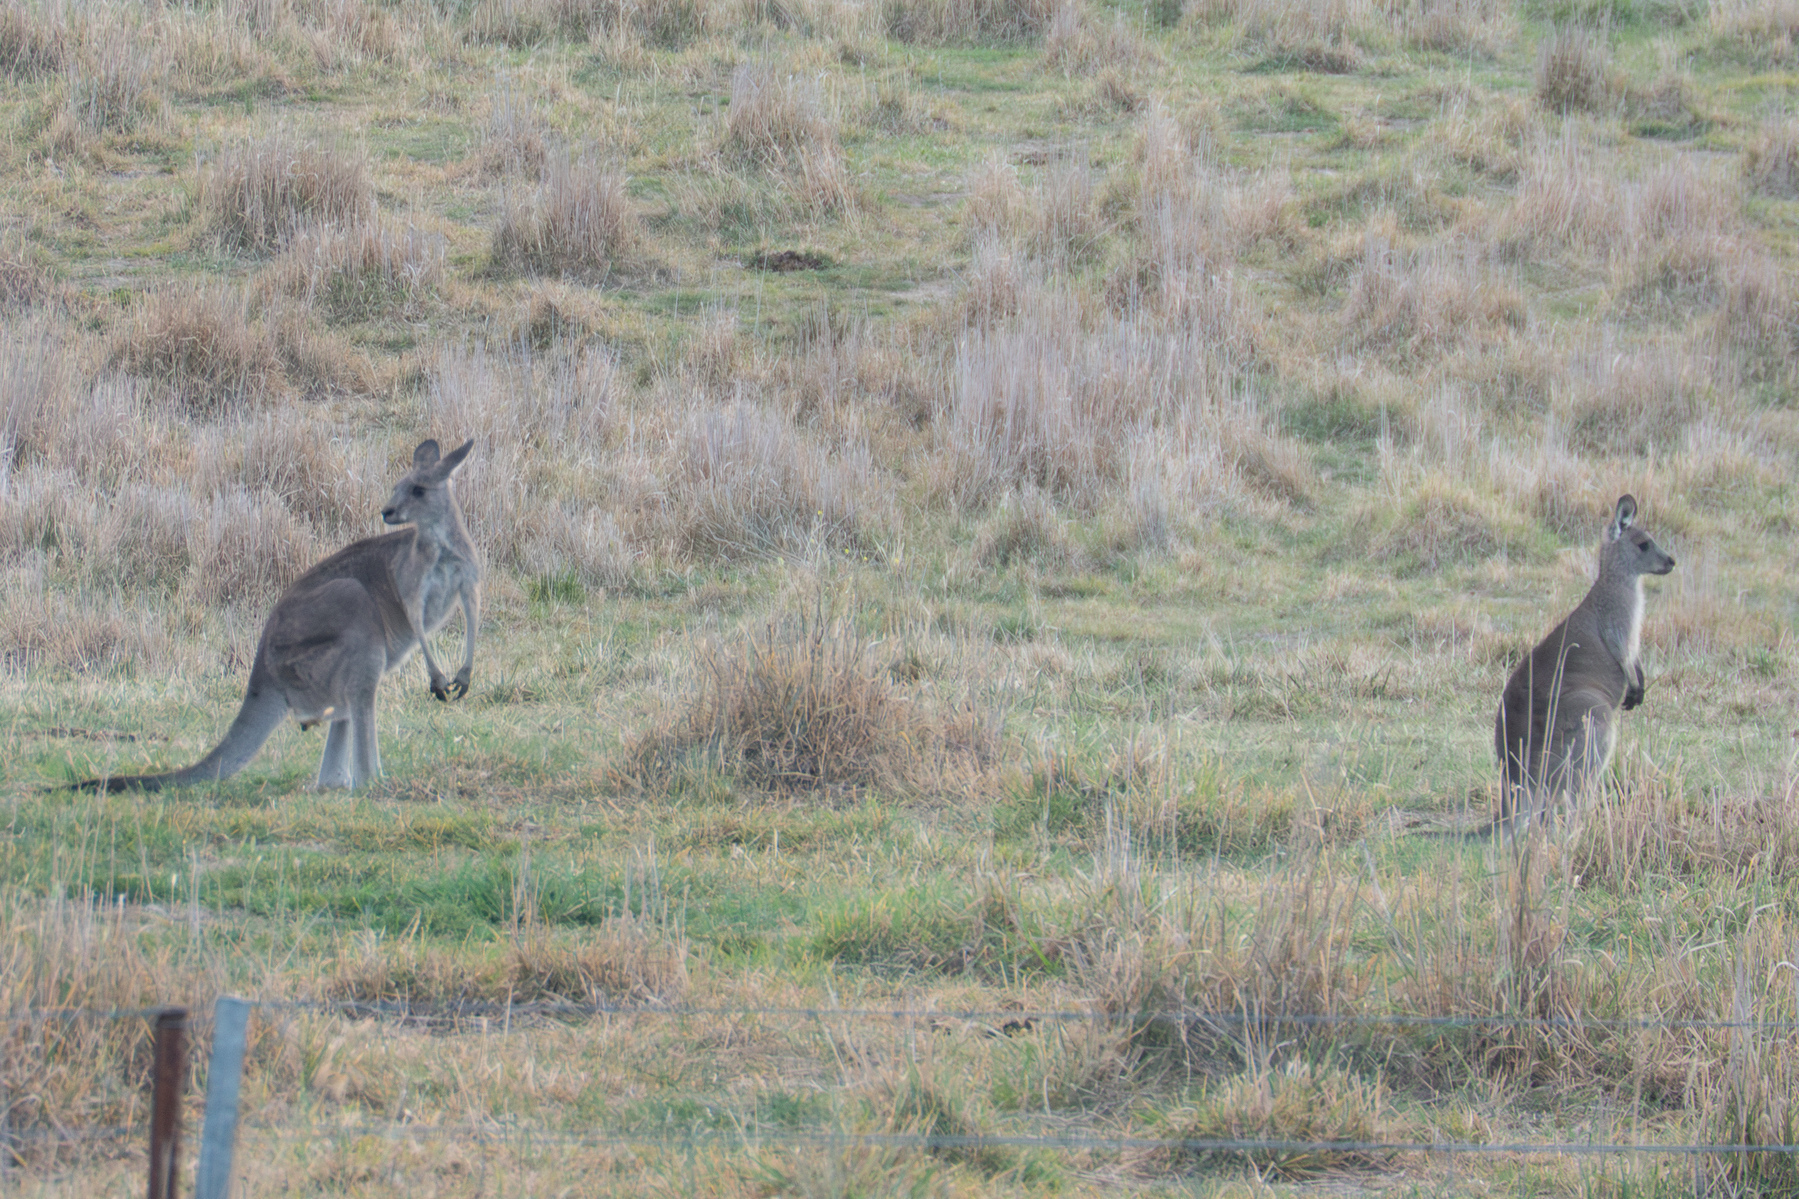 Two grey kangaroos in a field